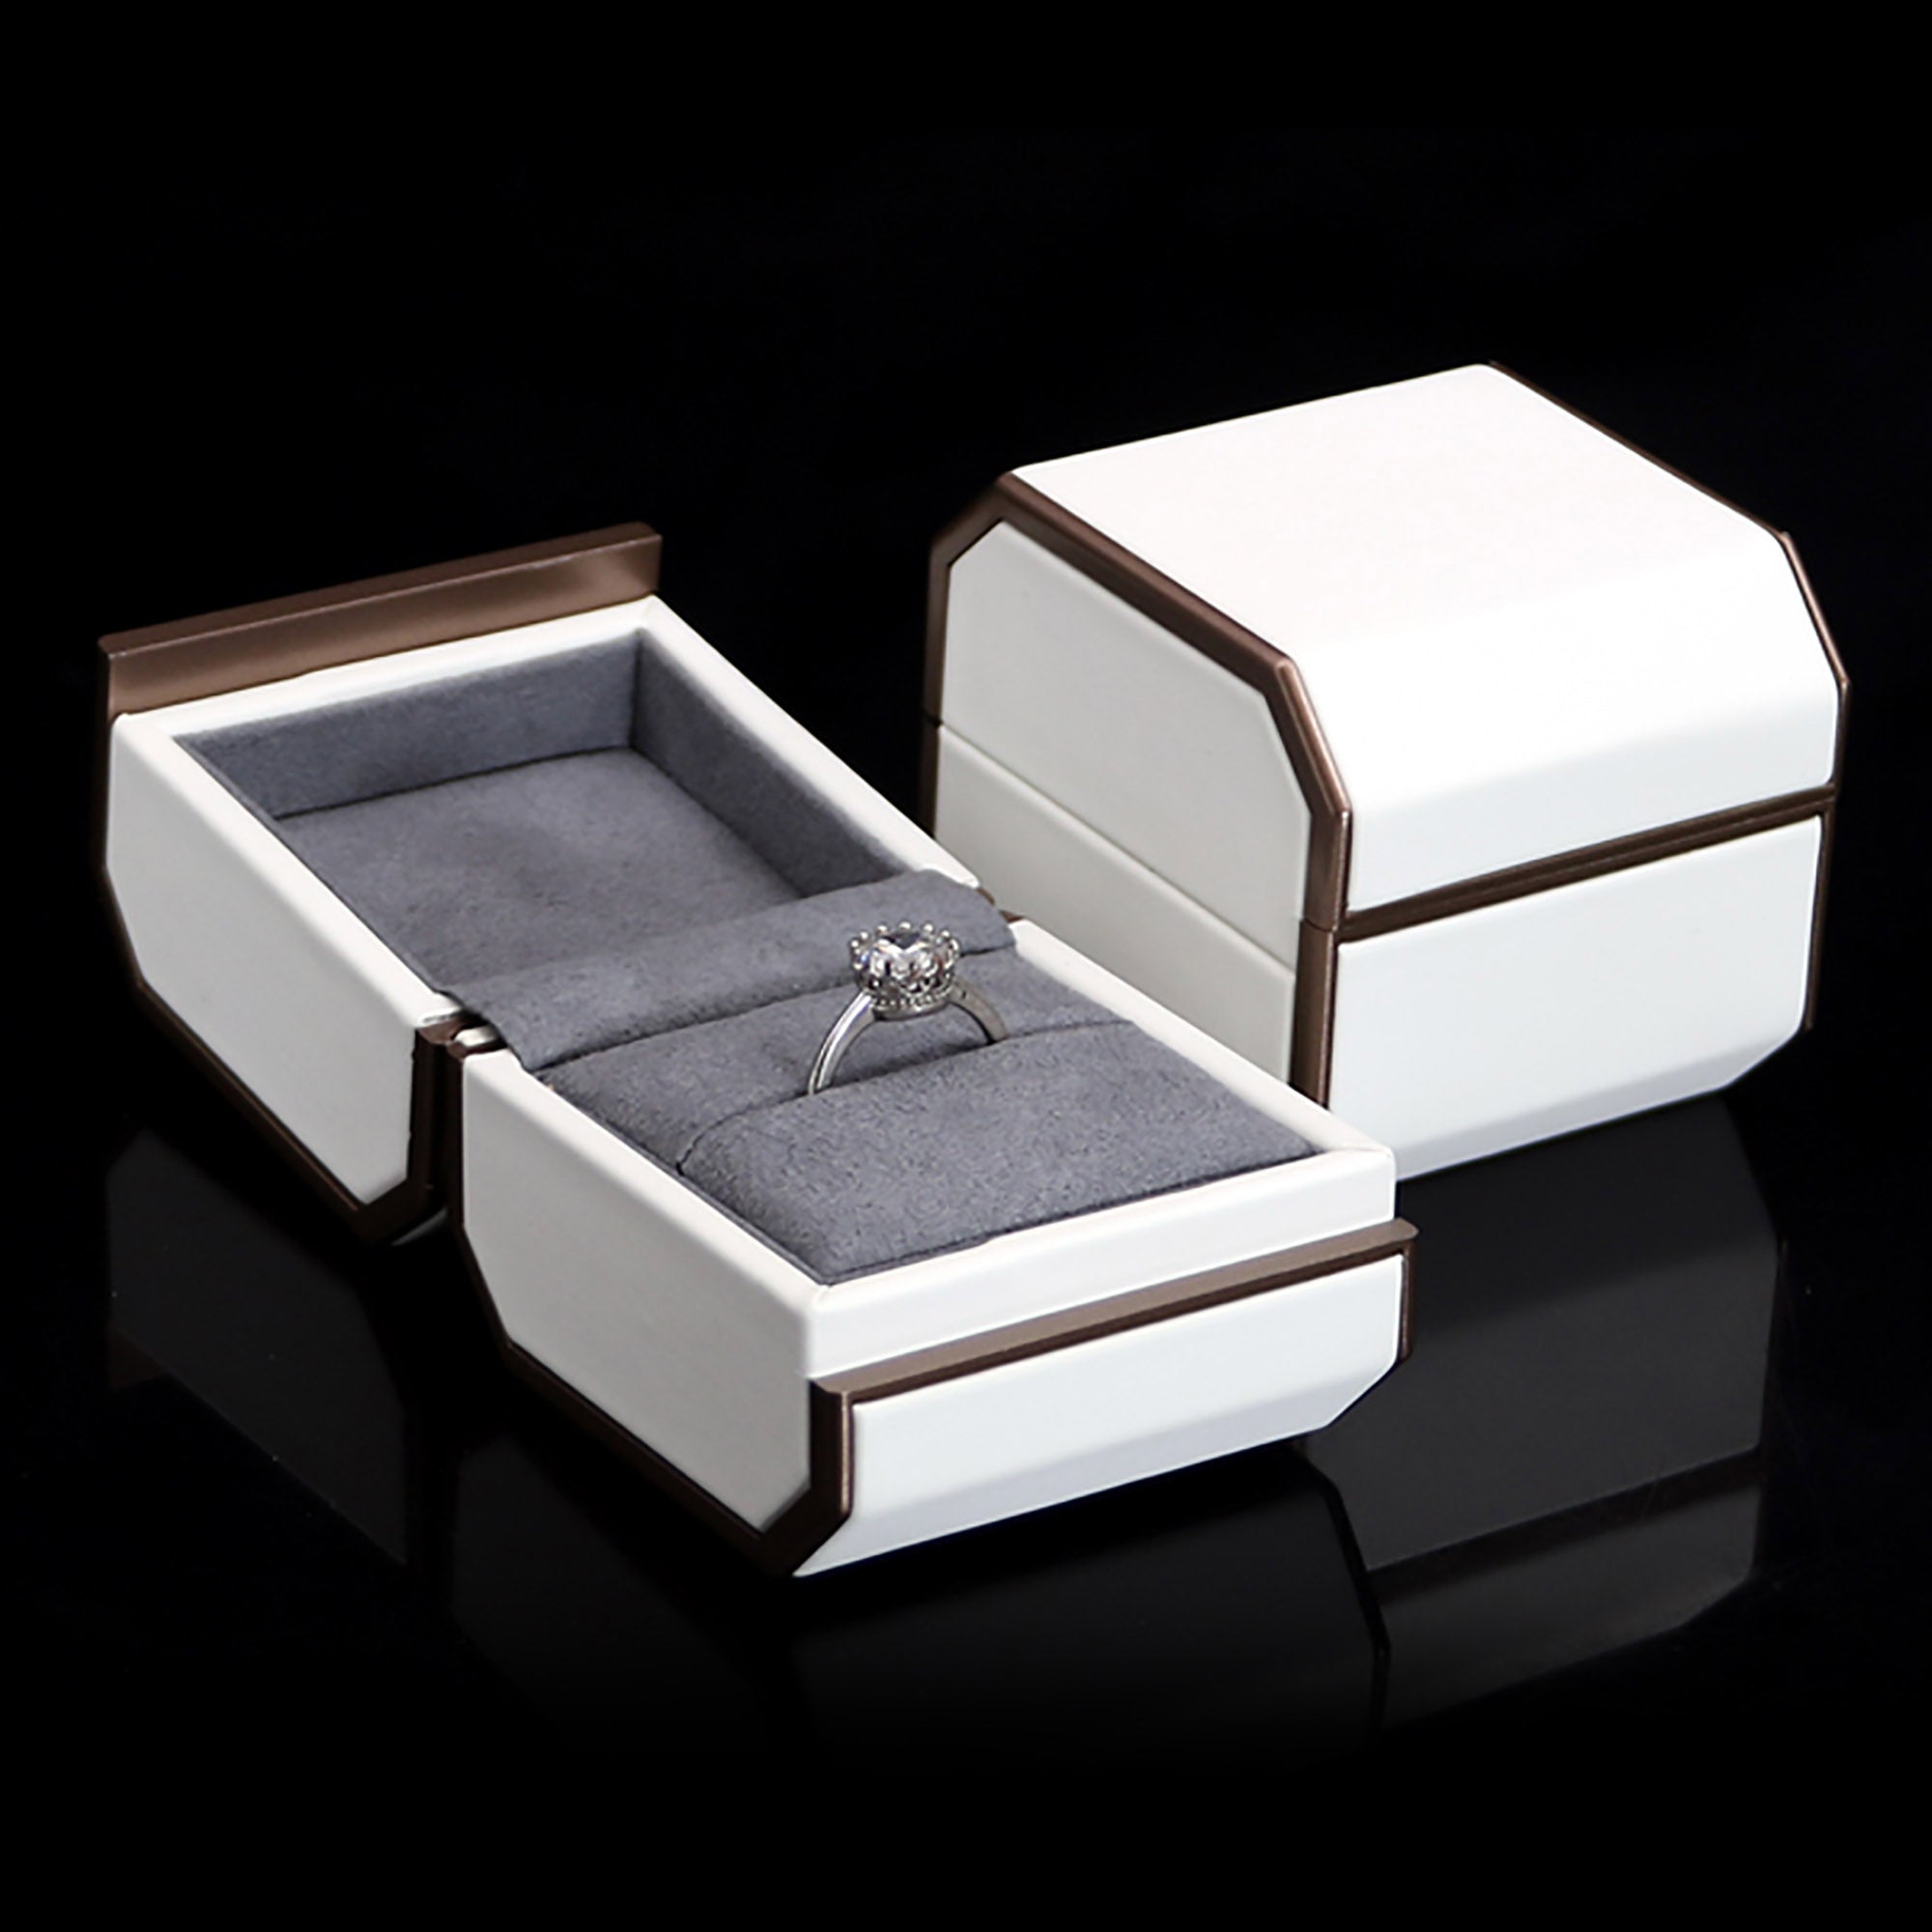 White Jewelry Box / Gift Box Vintage Gift Home Deco Decoration Design